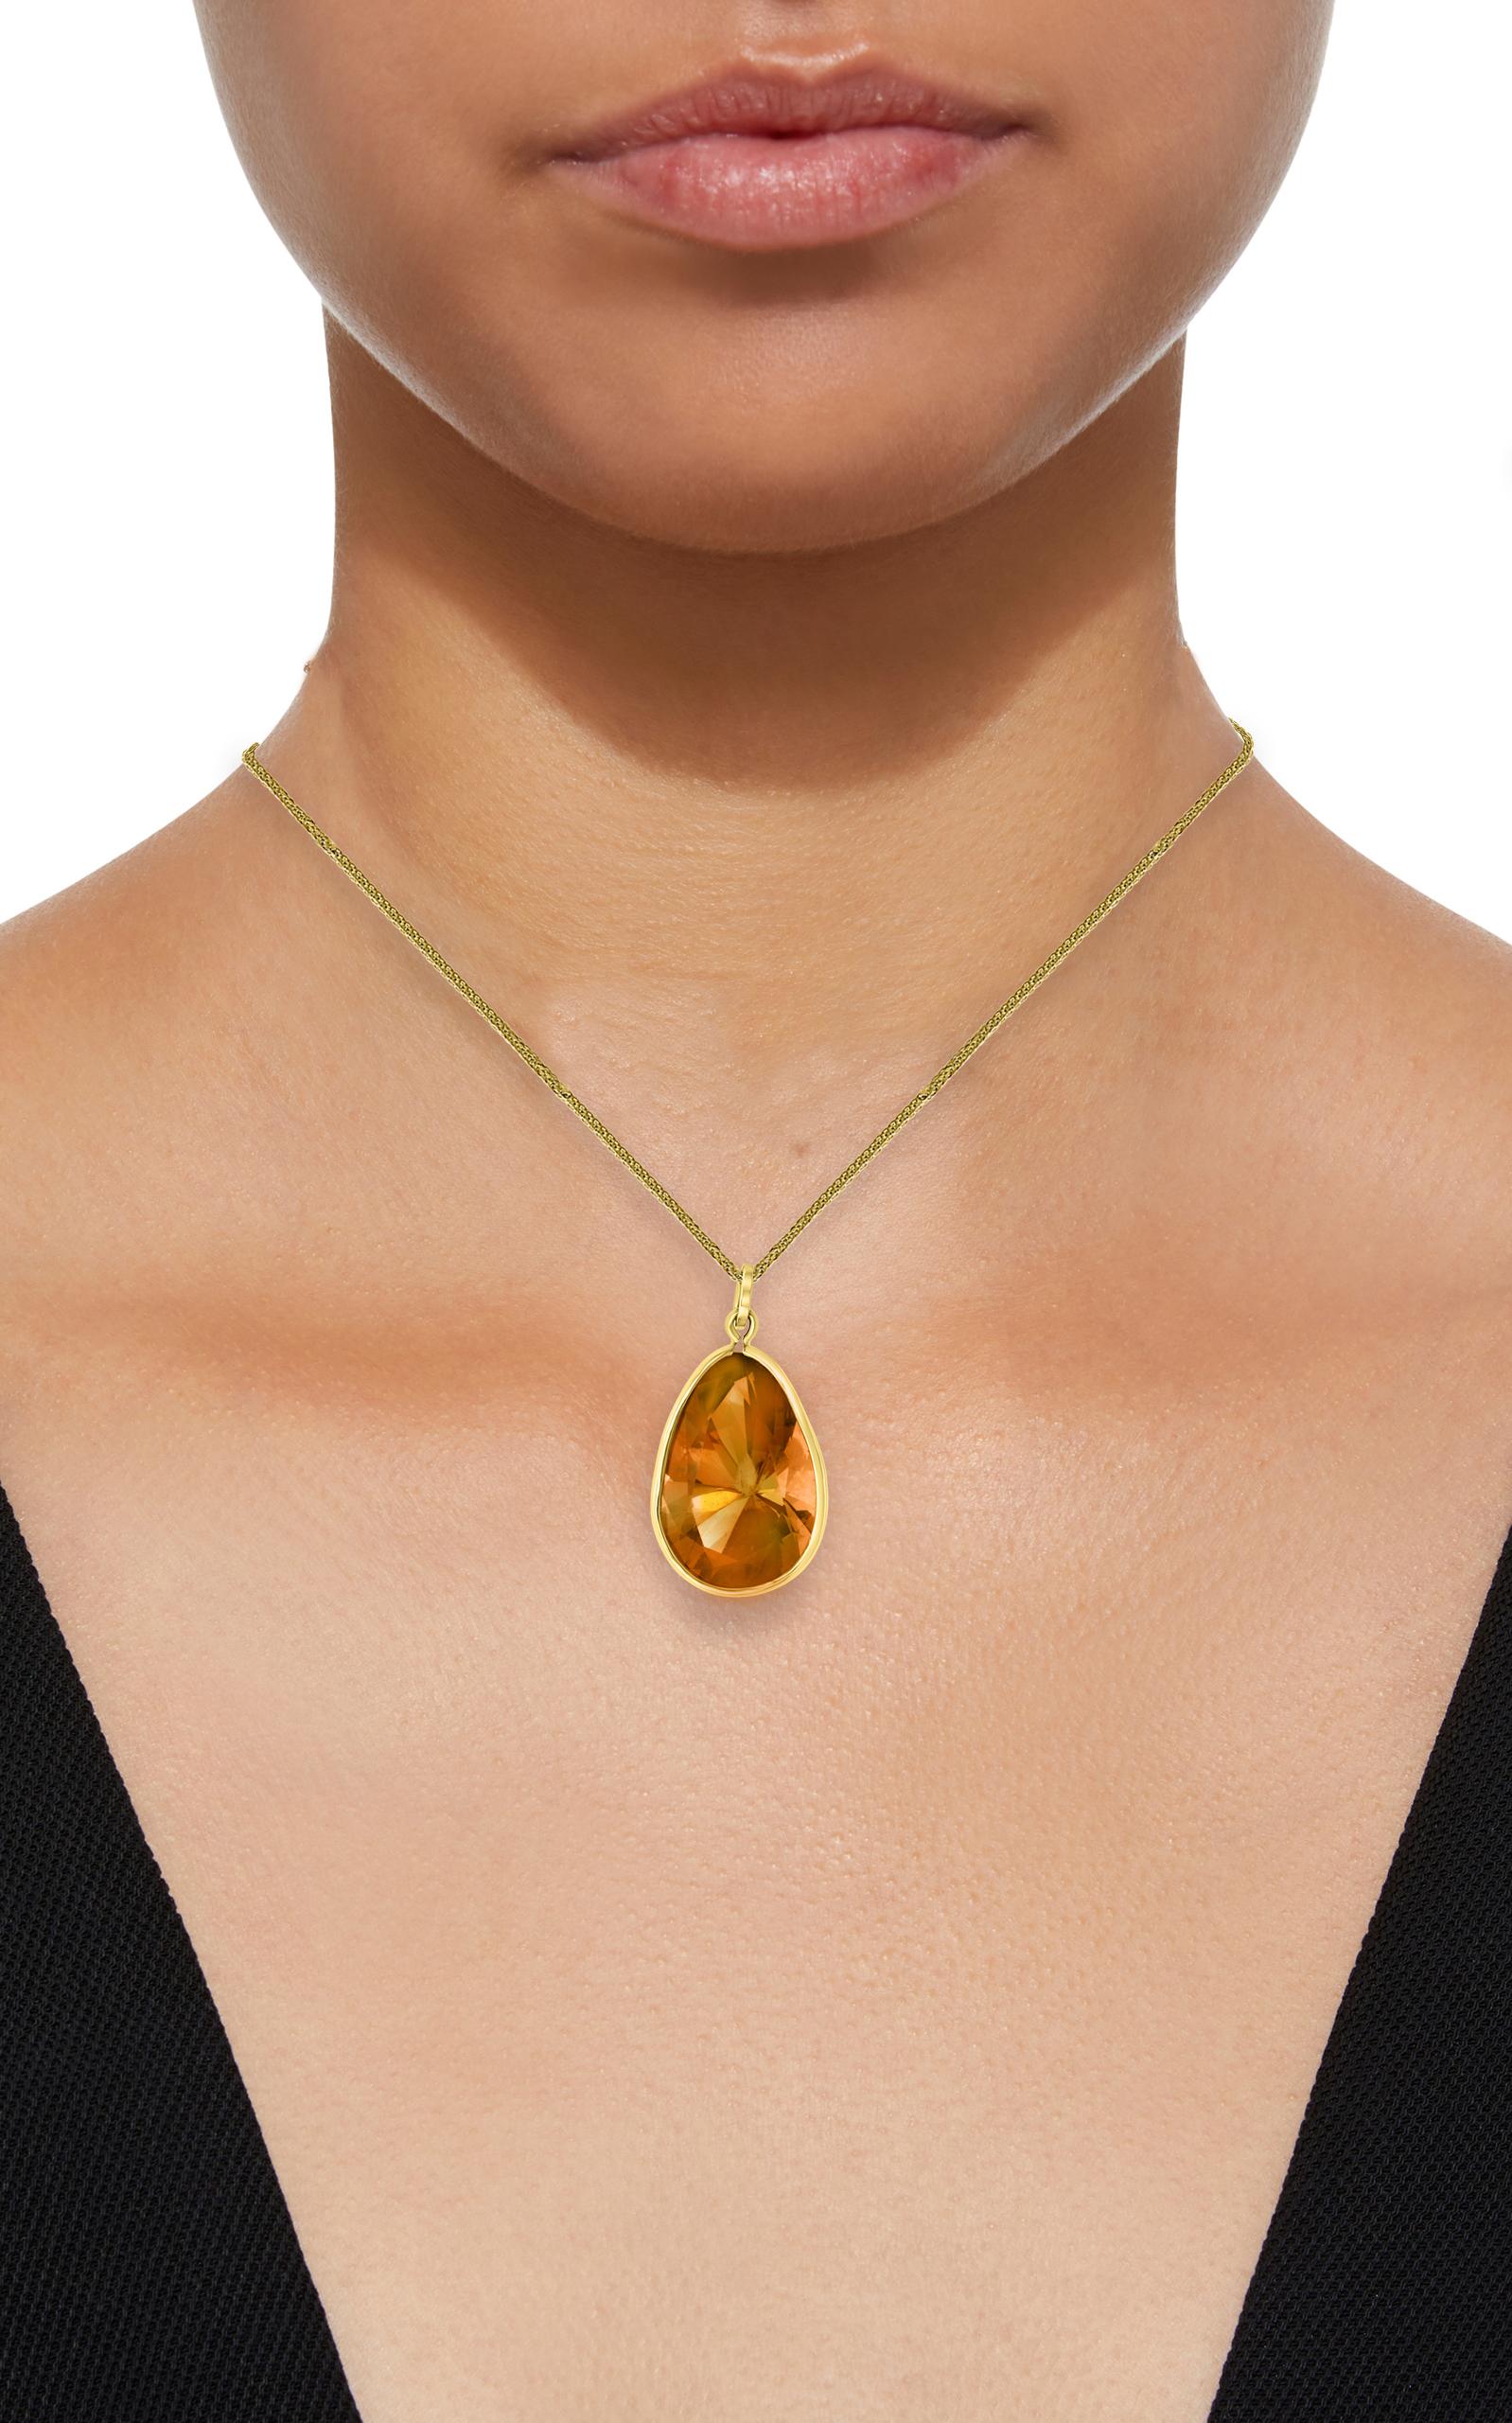 19 carat gold necklace